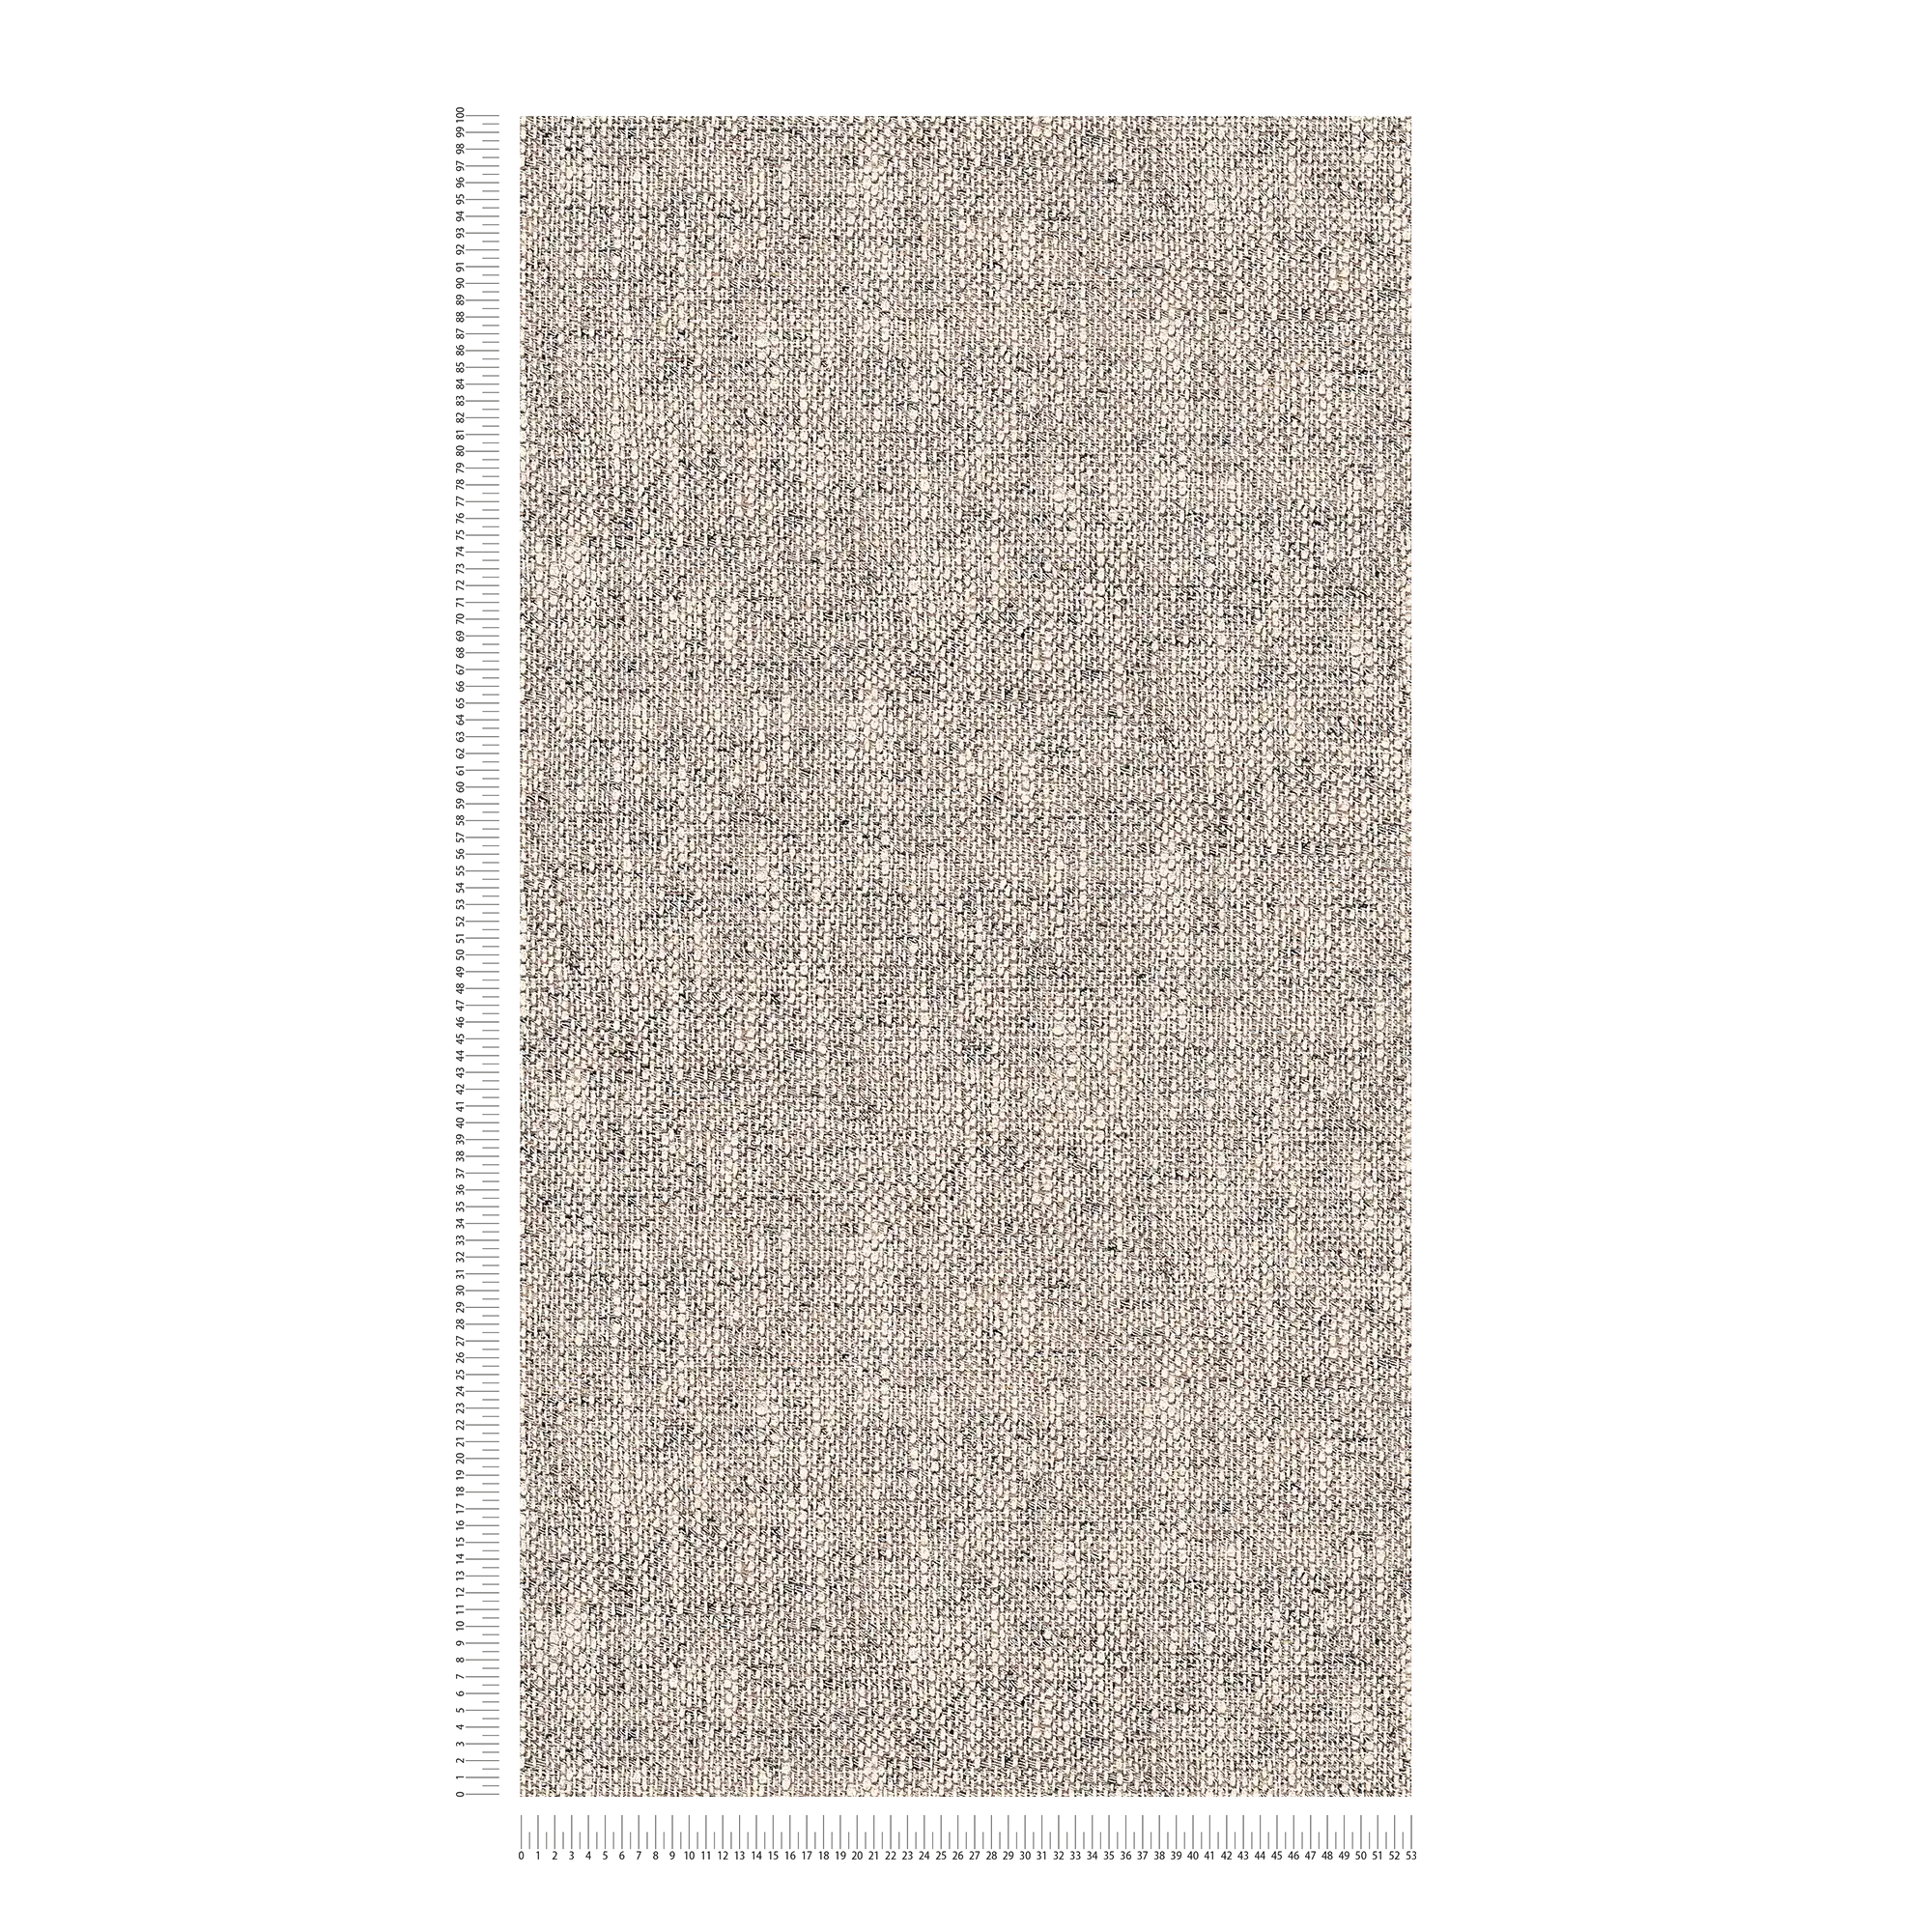             Textile look wallpaper realistic - brown, white, black
        